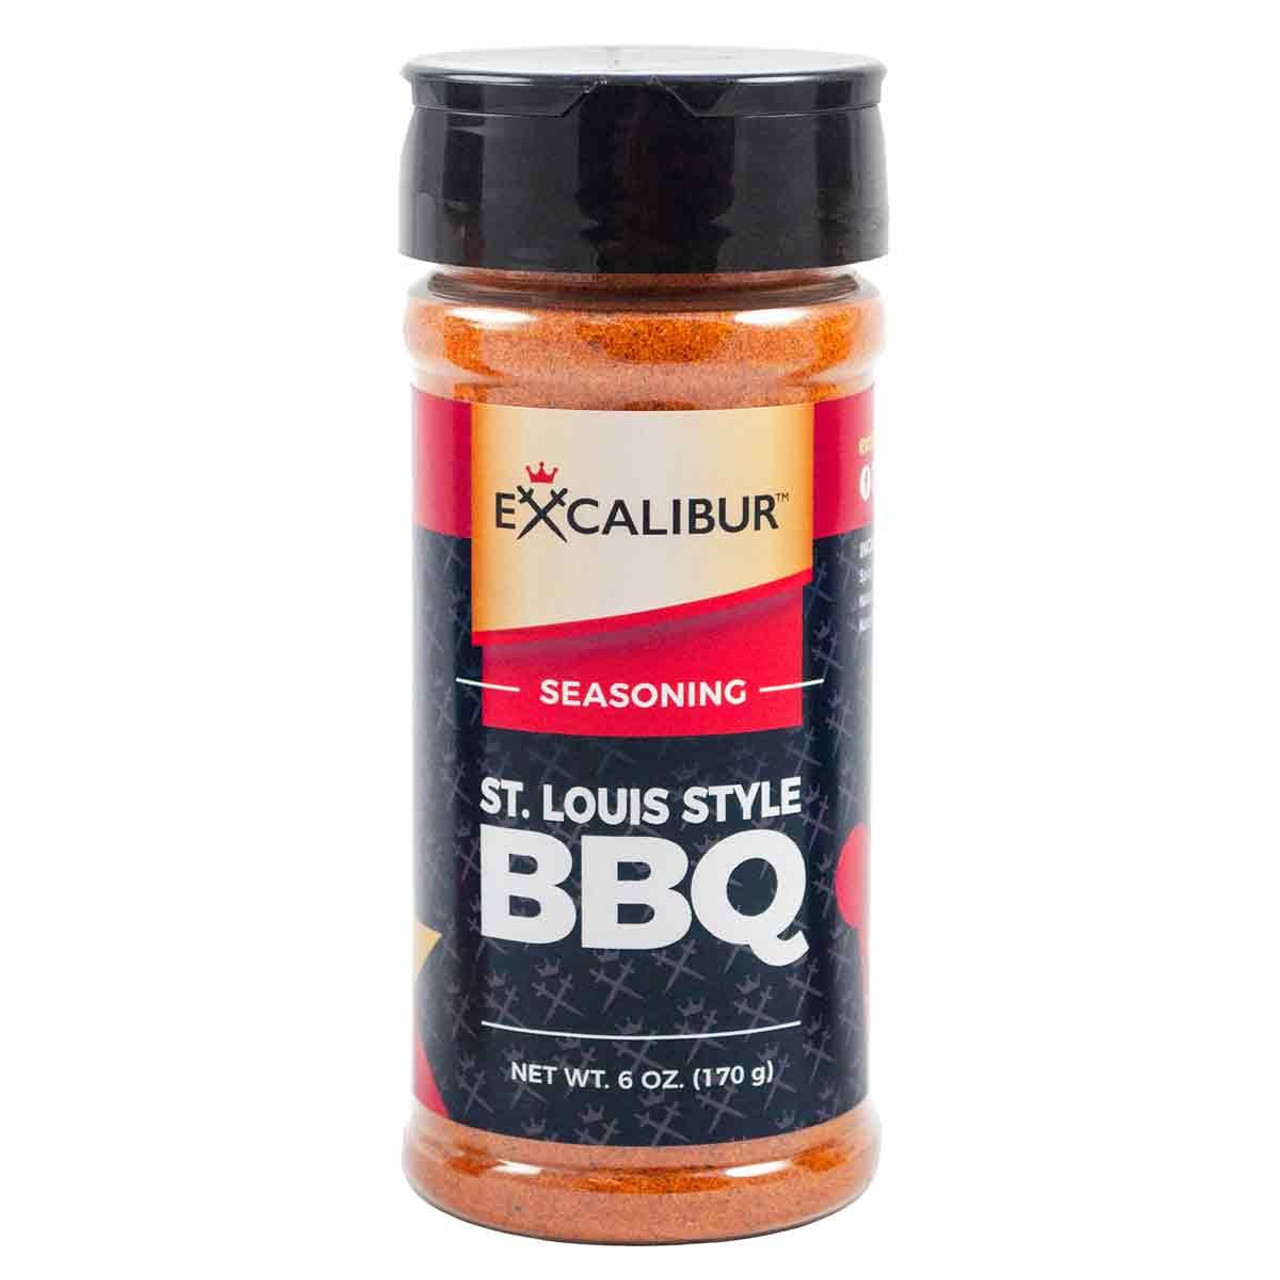 St. Louis Style BBQ Seasoning